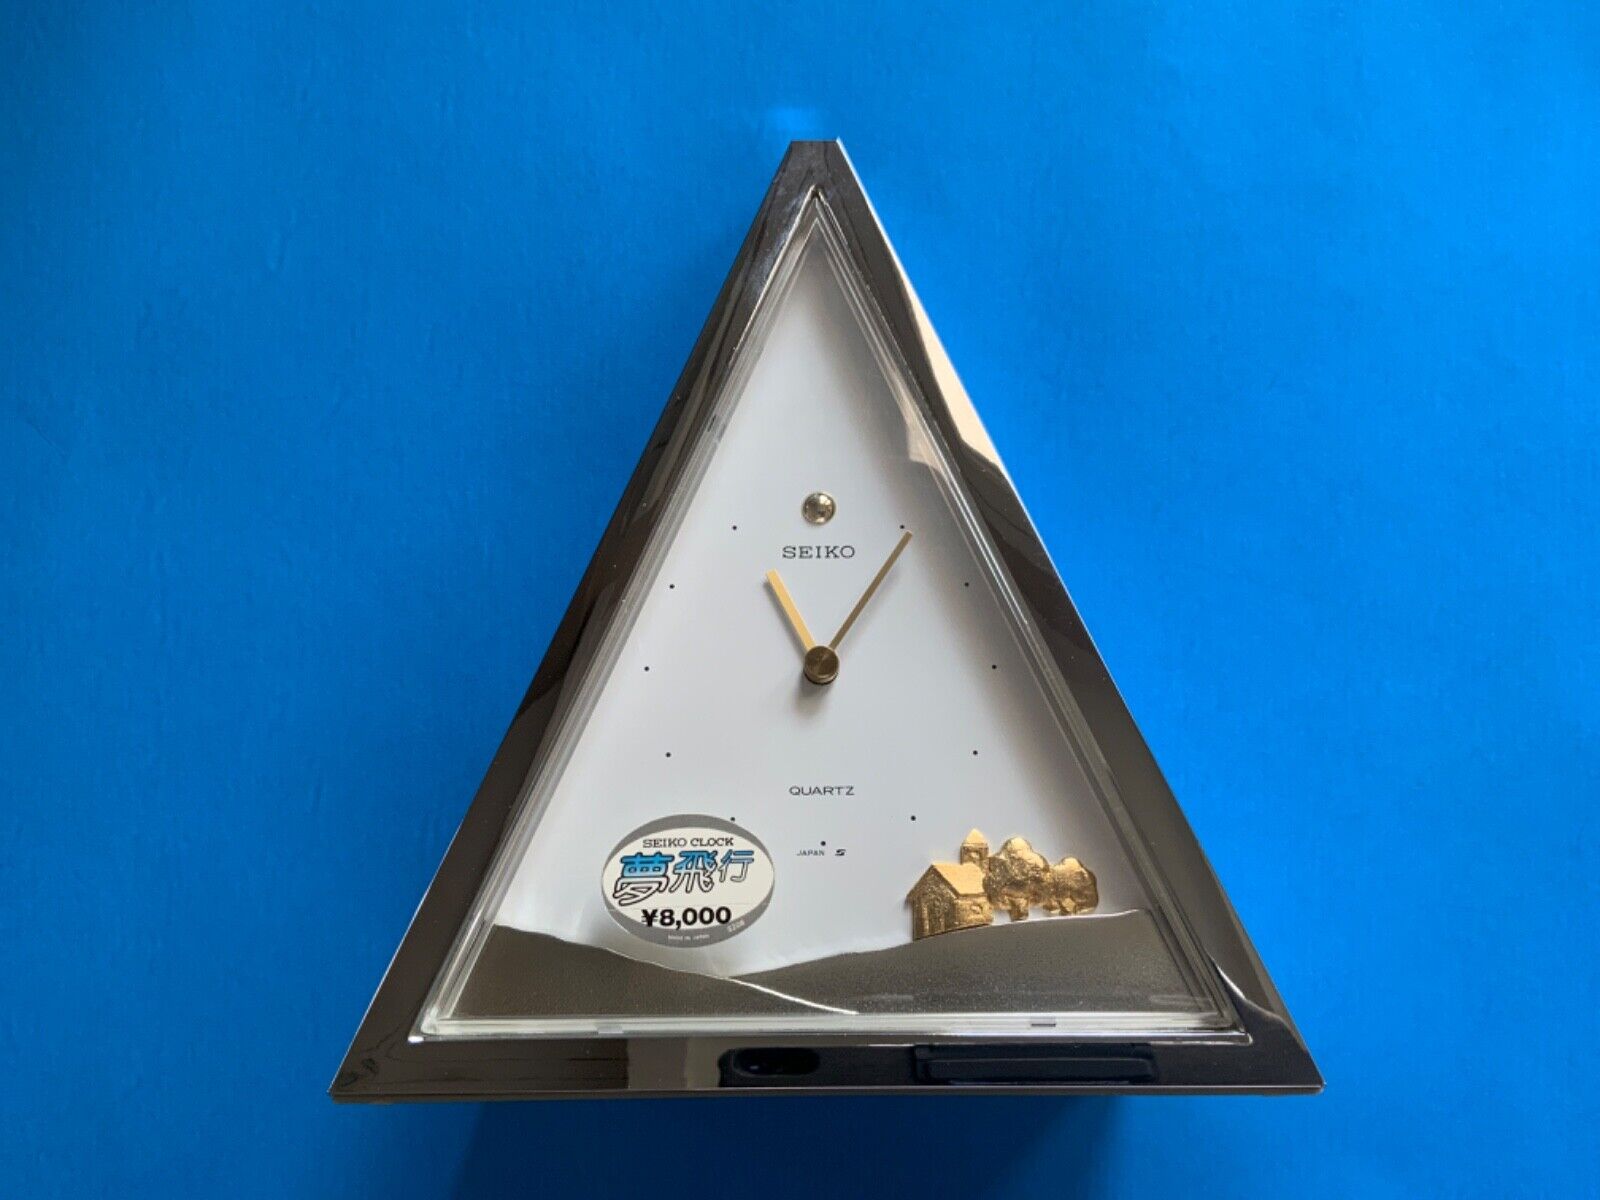 Seiko Triangle Clock - AA Battery Operated - Silver - Original Sticker - Working